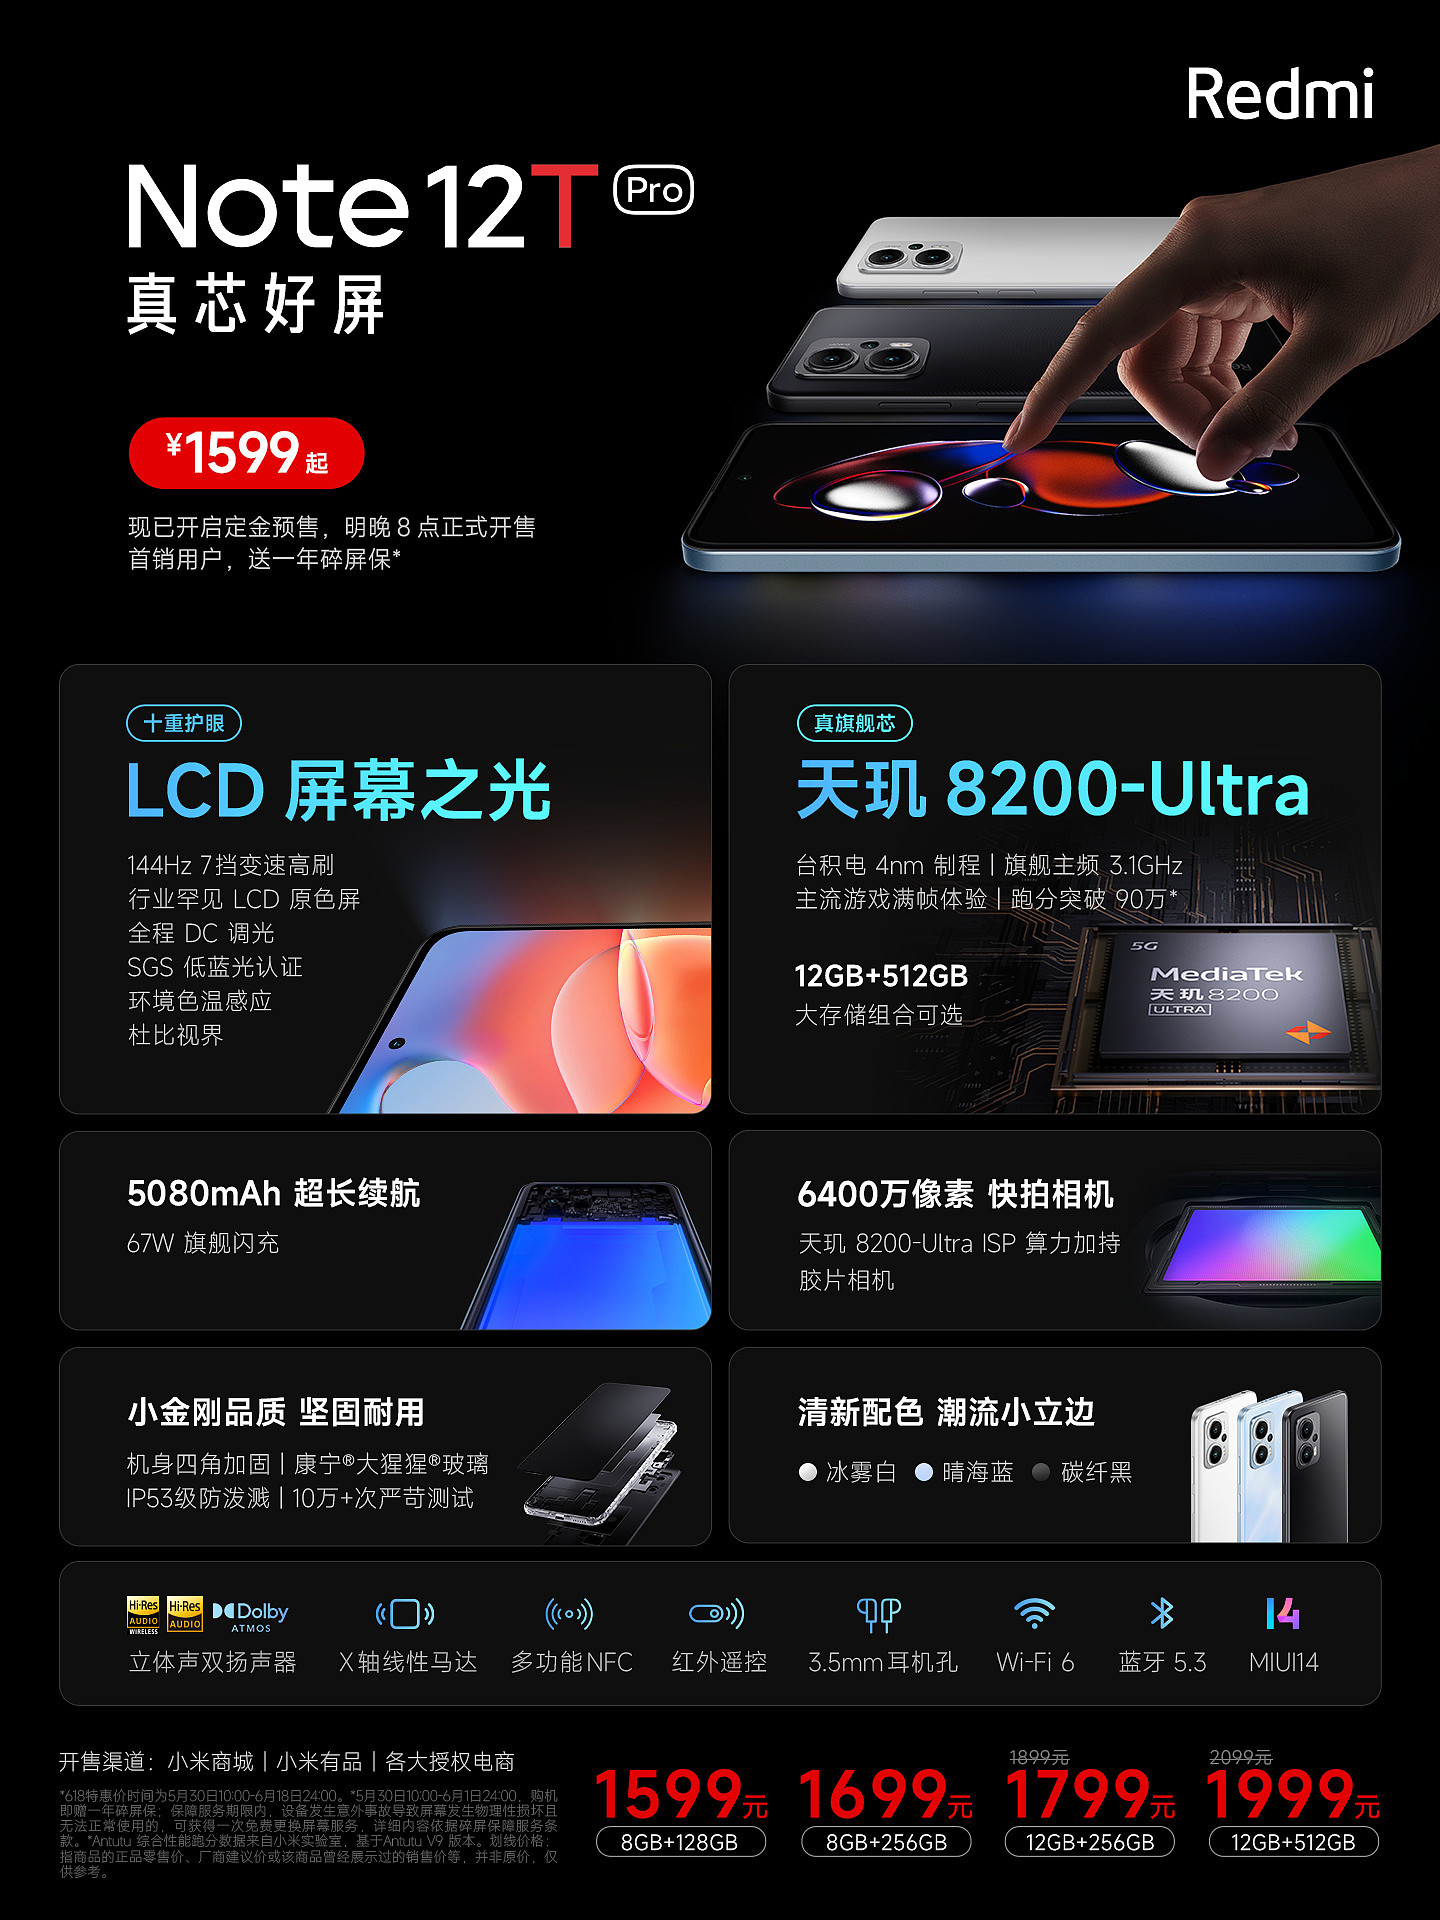 12G 版 1399 元再降新低：Redmi Note 12T Pro 手机大促（减 500 元） - 1